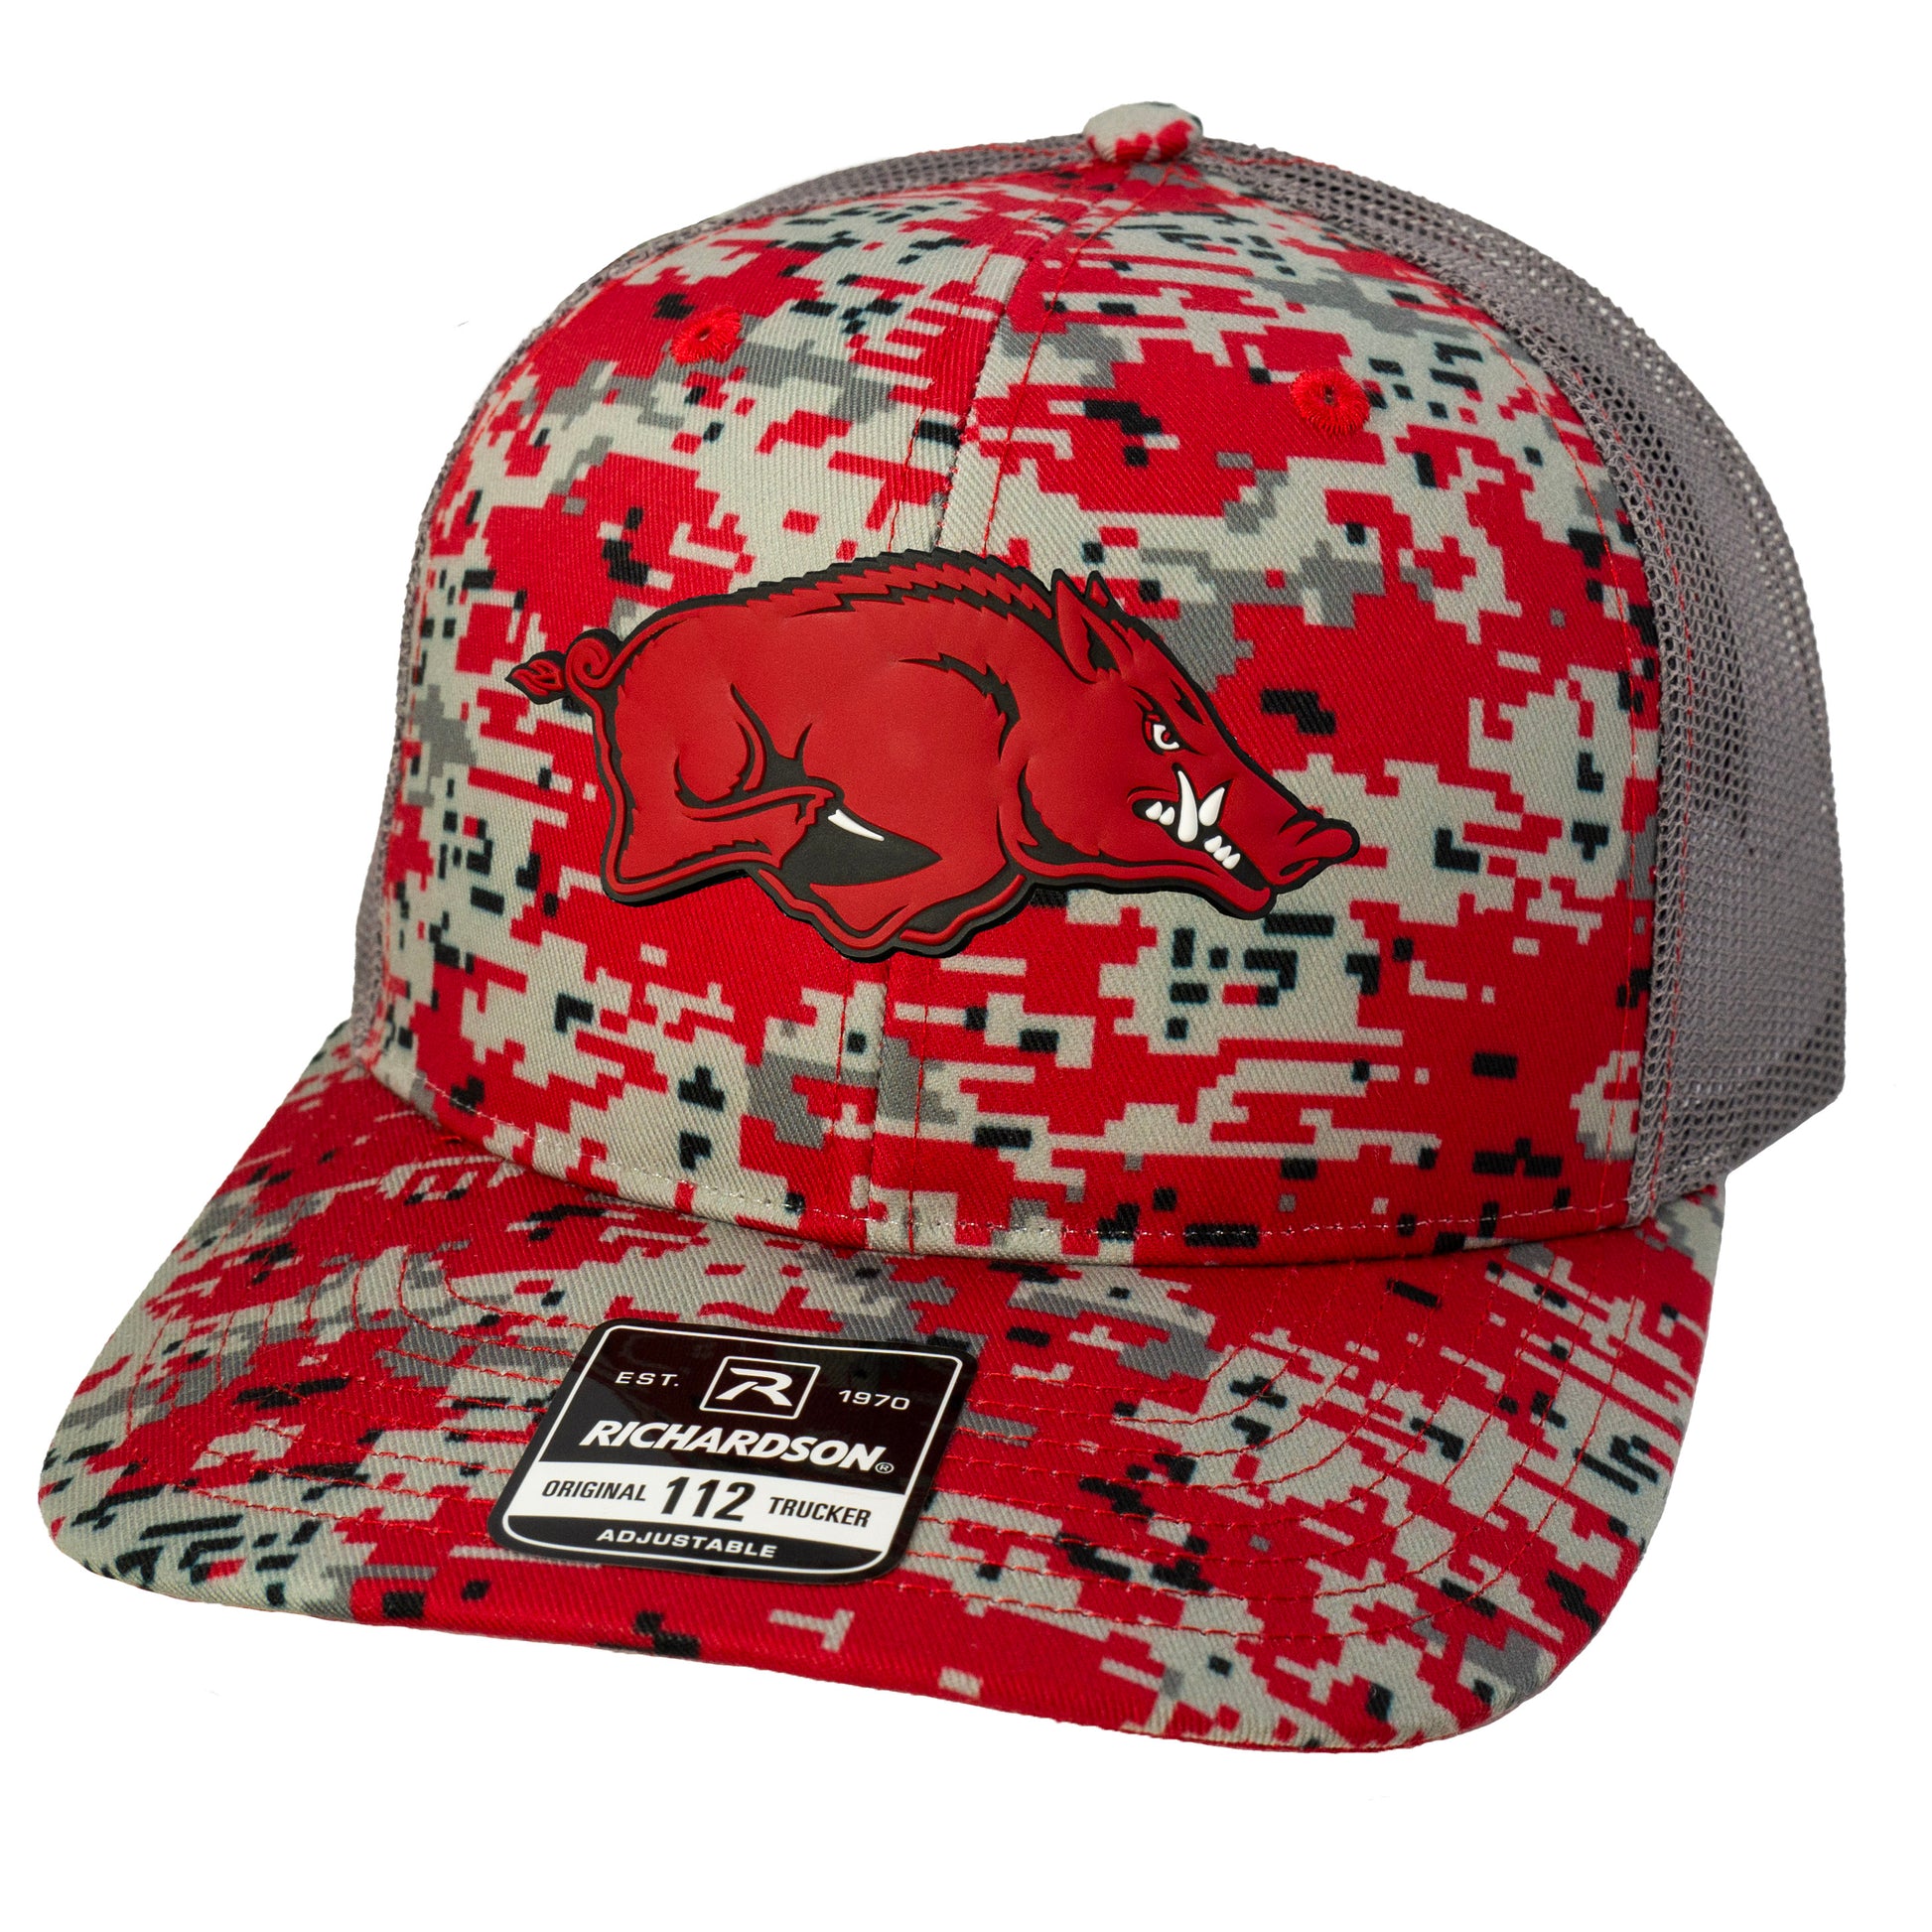 Arkansas Razorbacks 3D Patterned Snapback Trucker Hat- Red Digital Camo - Ten Gallon Hat Co.